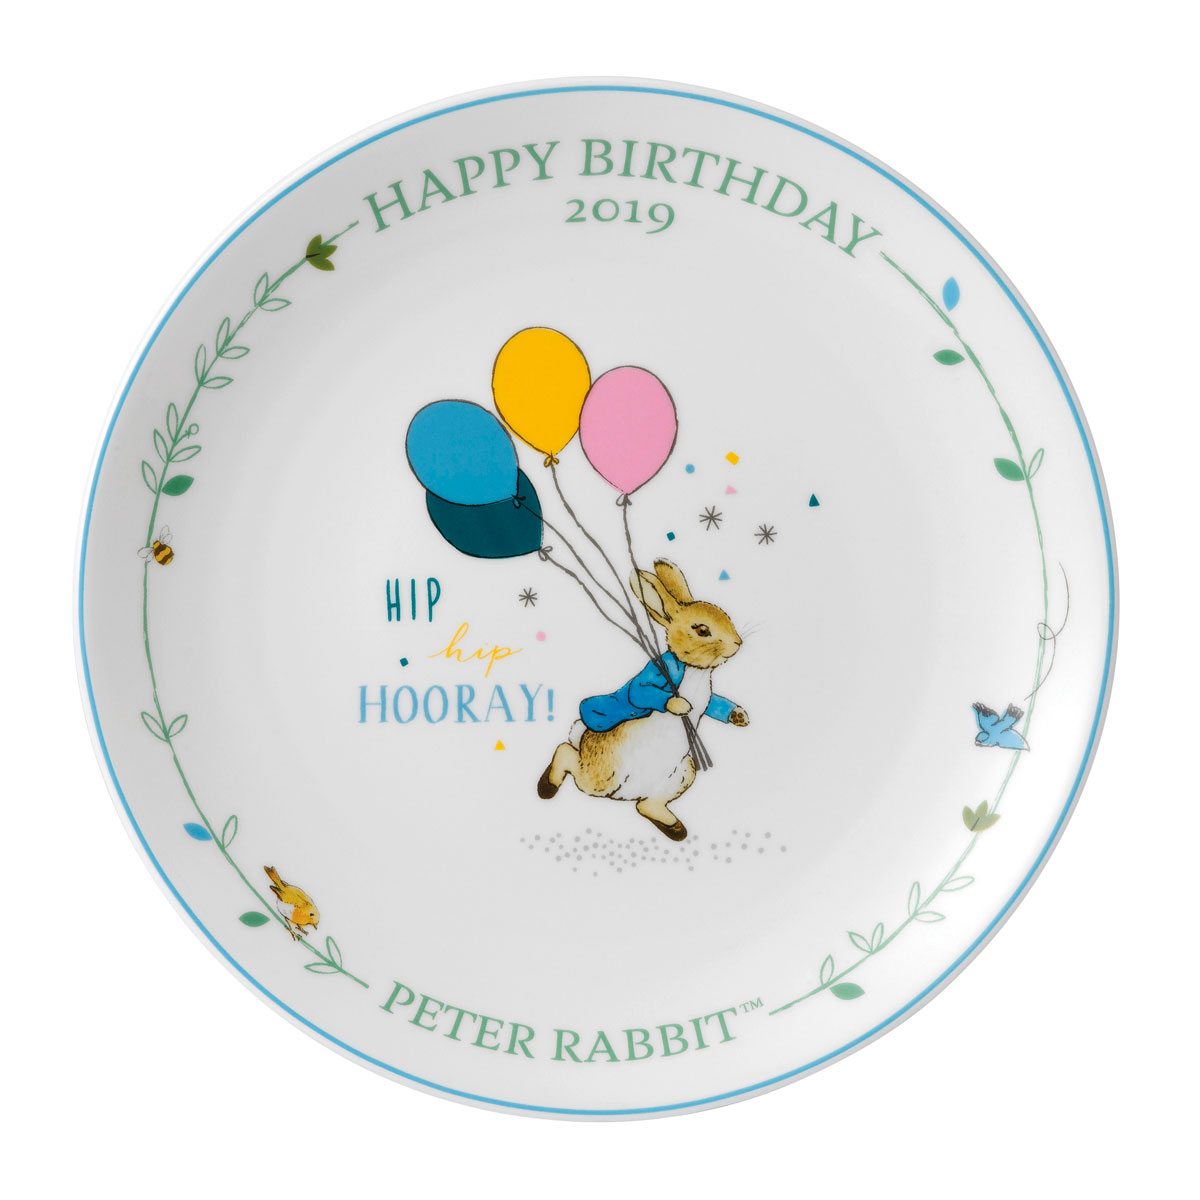 Wedgwood China Peter Rabbit 2019 Annual Birthday Plate